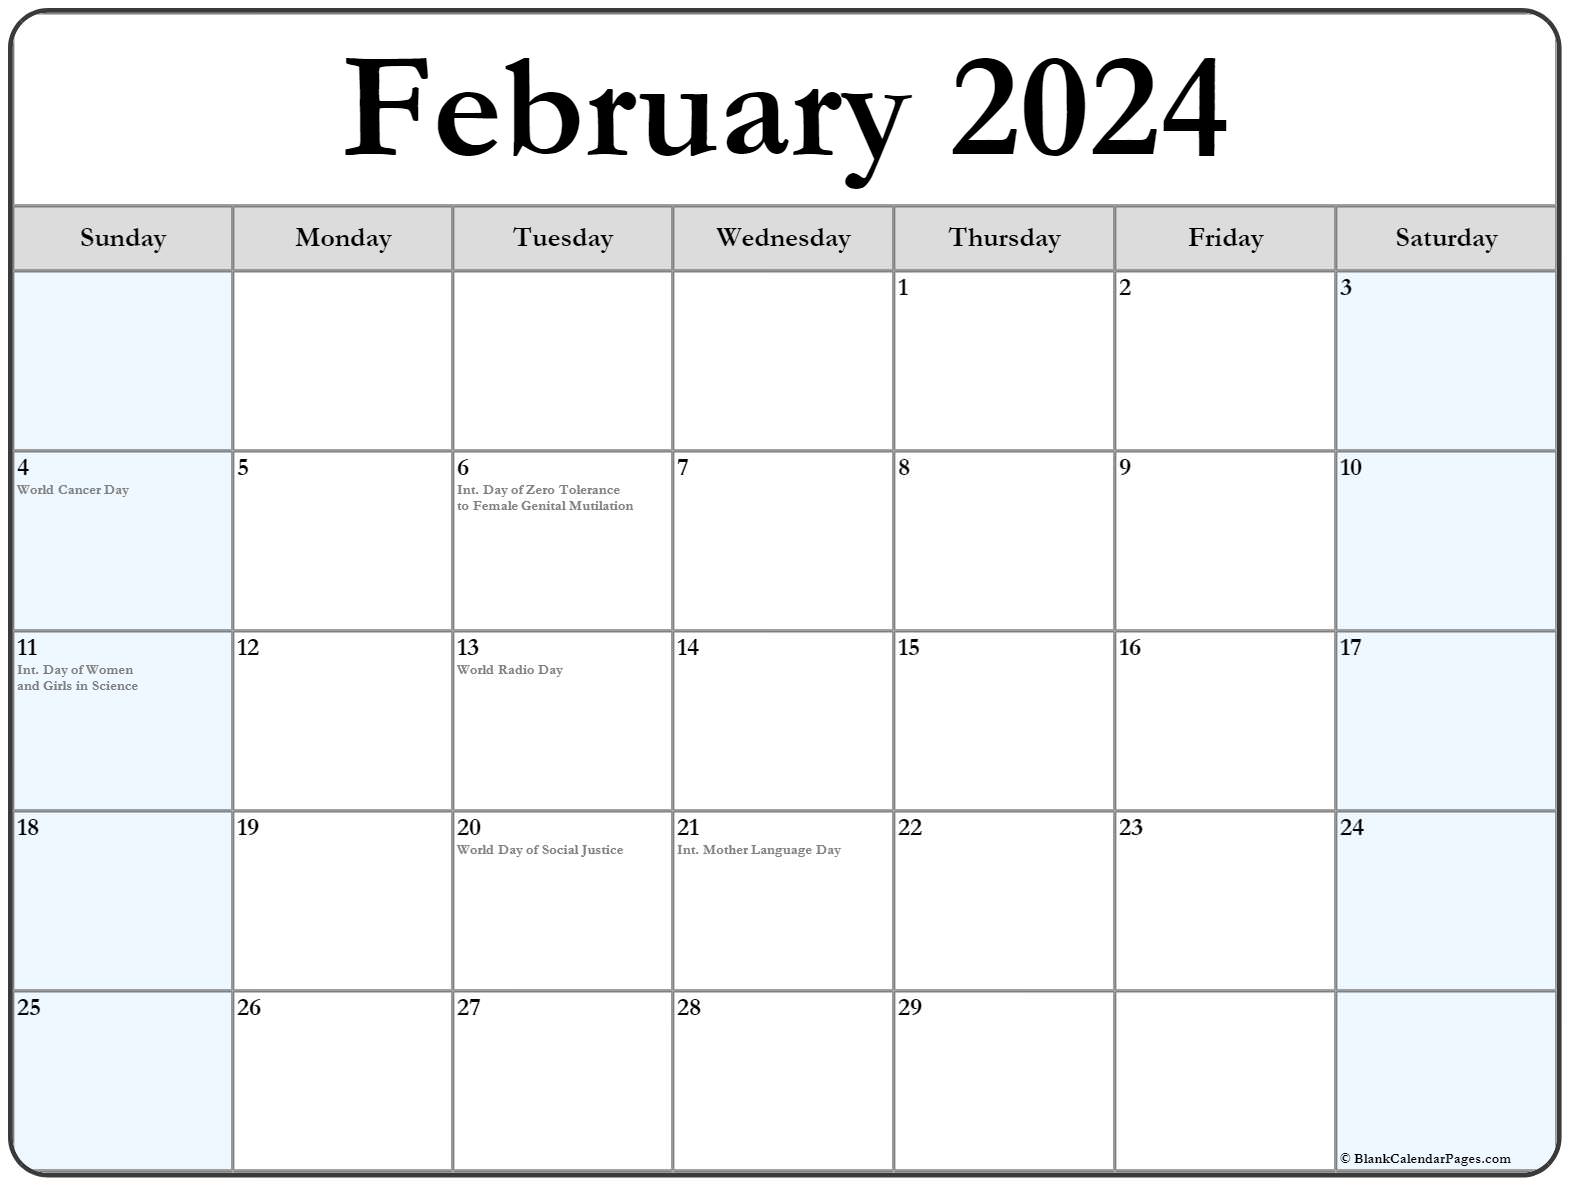 February 2021 calendar with holidays